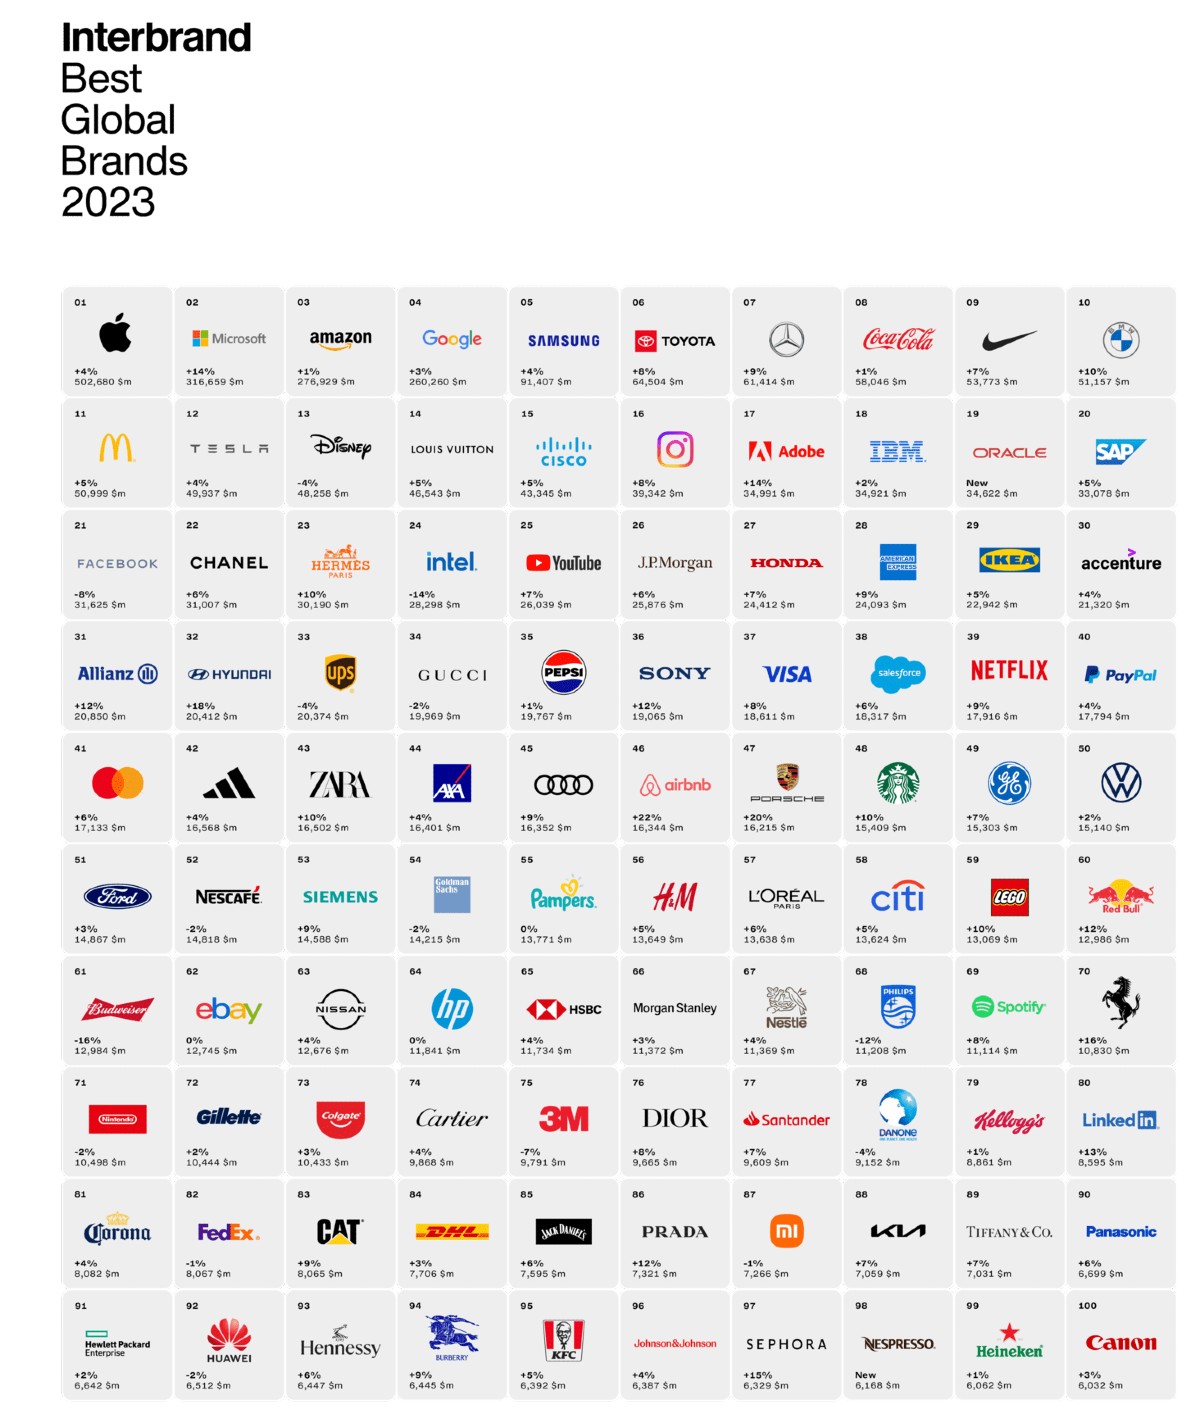 Interbrand best global brands 2023